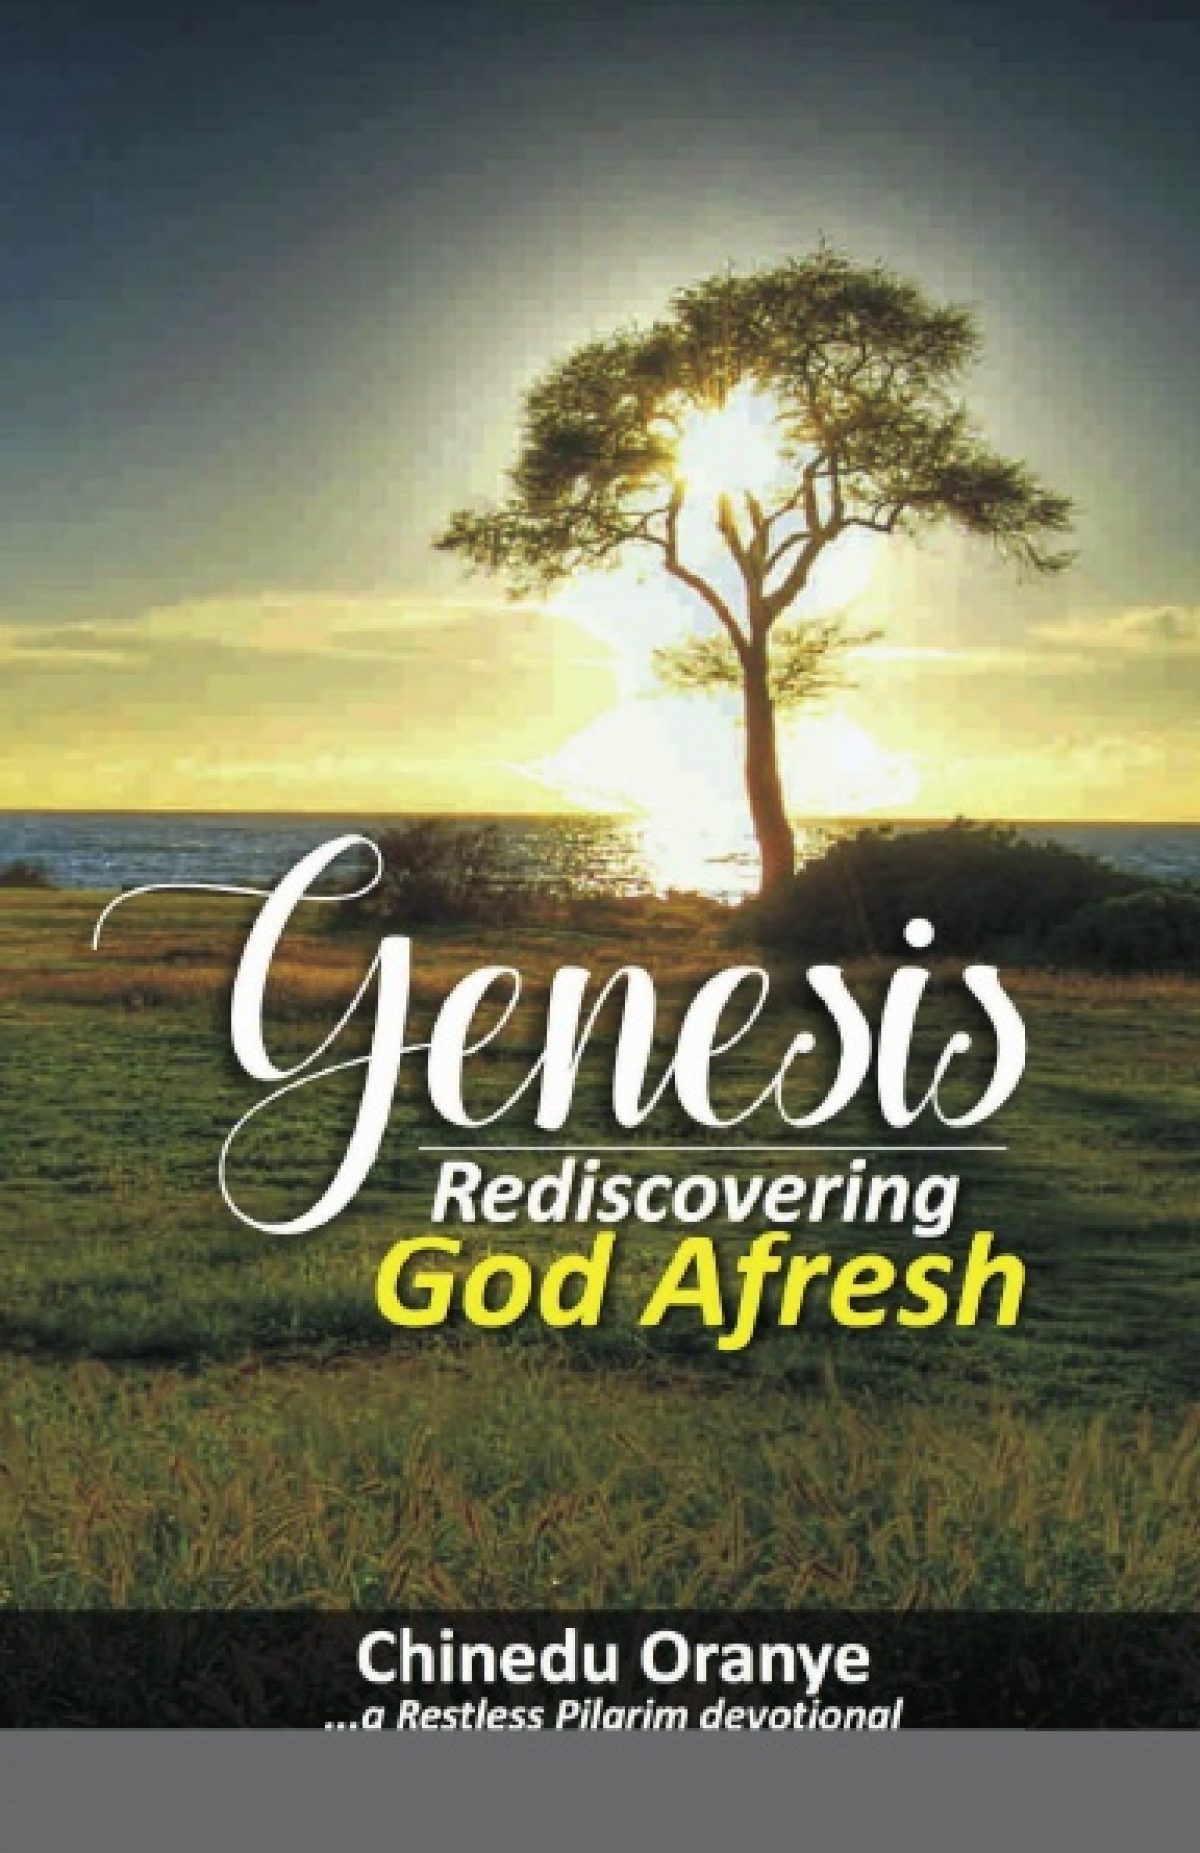 Genesis - Rediscovering God Afresh Paperback Edition by Chinedu Oranye